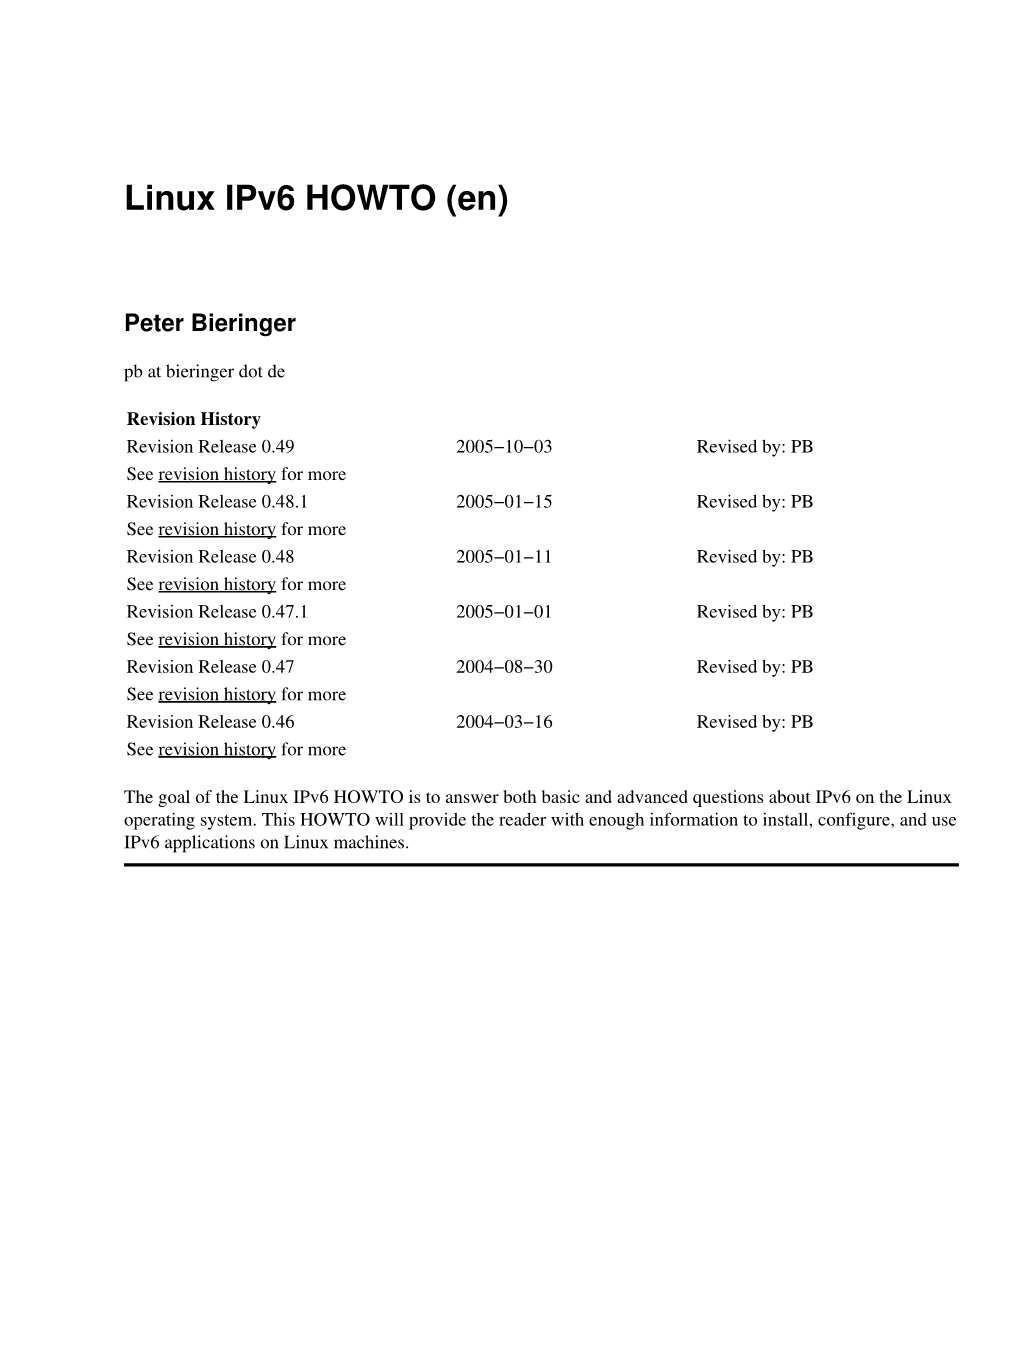 Linux Ipv6 HOWTO (En)